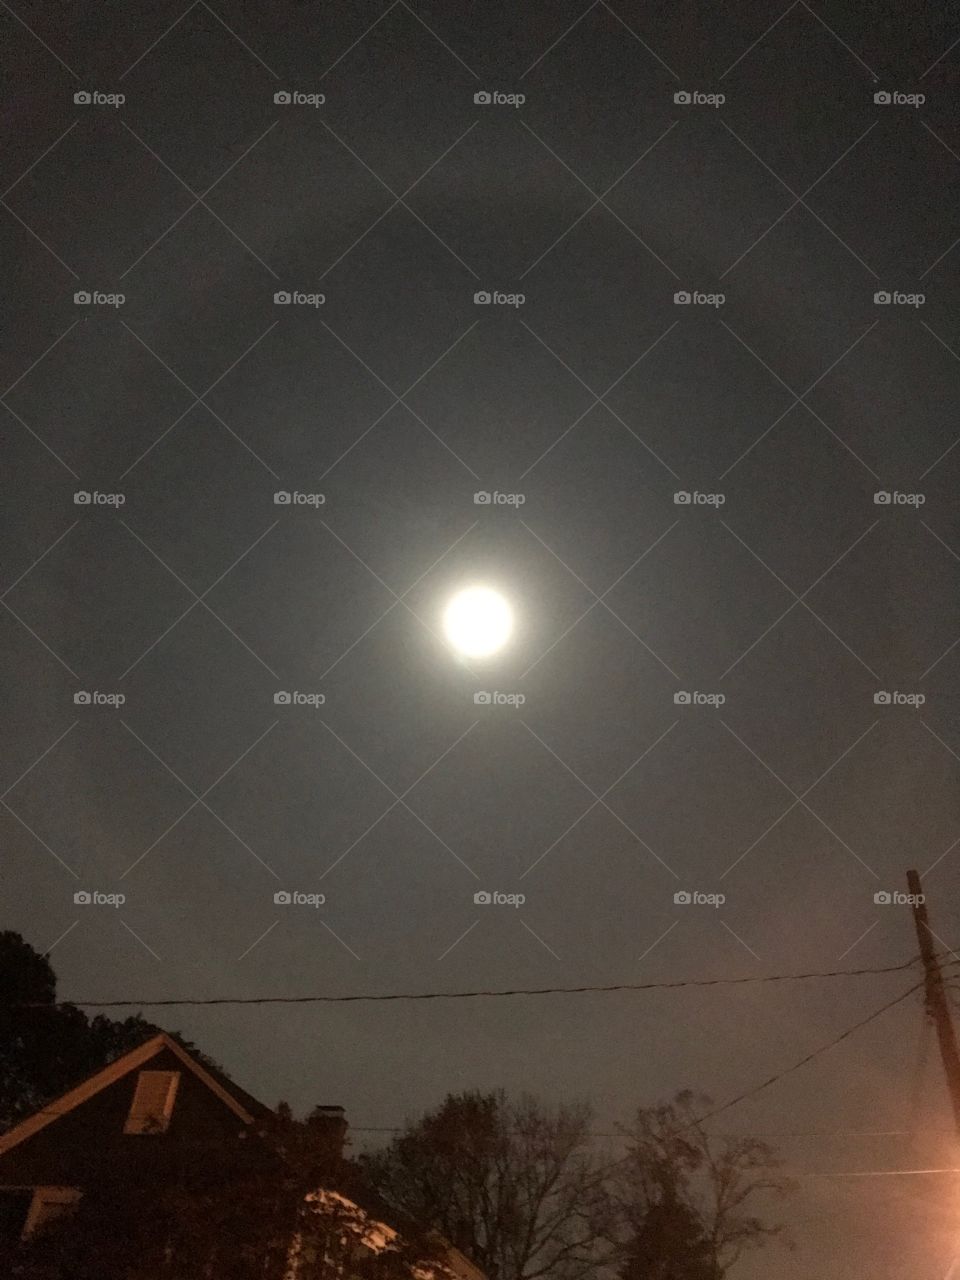 The aura of the moon